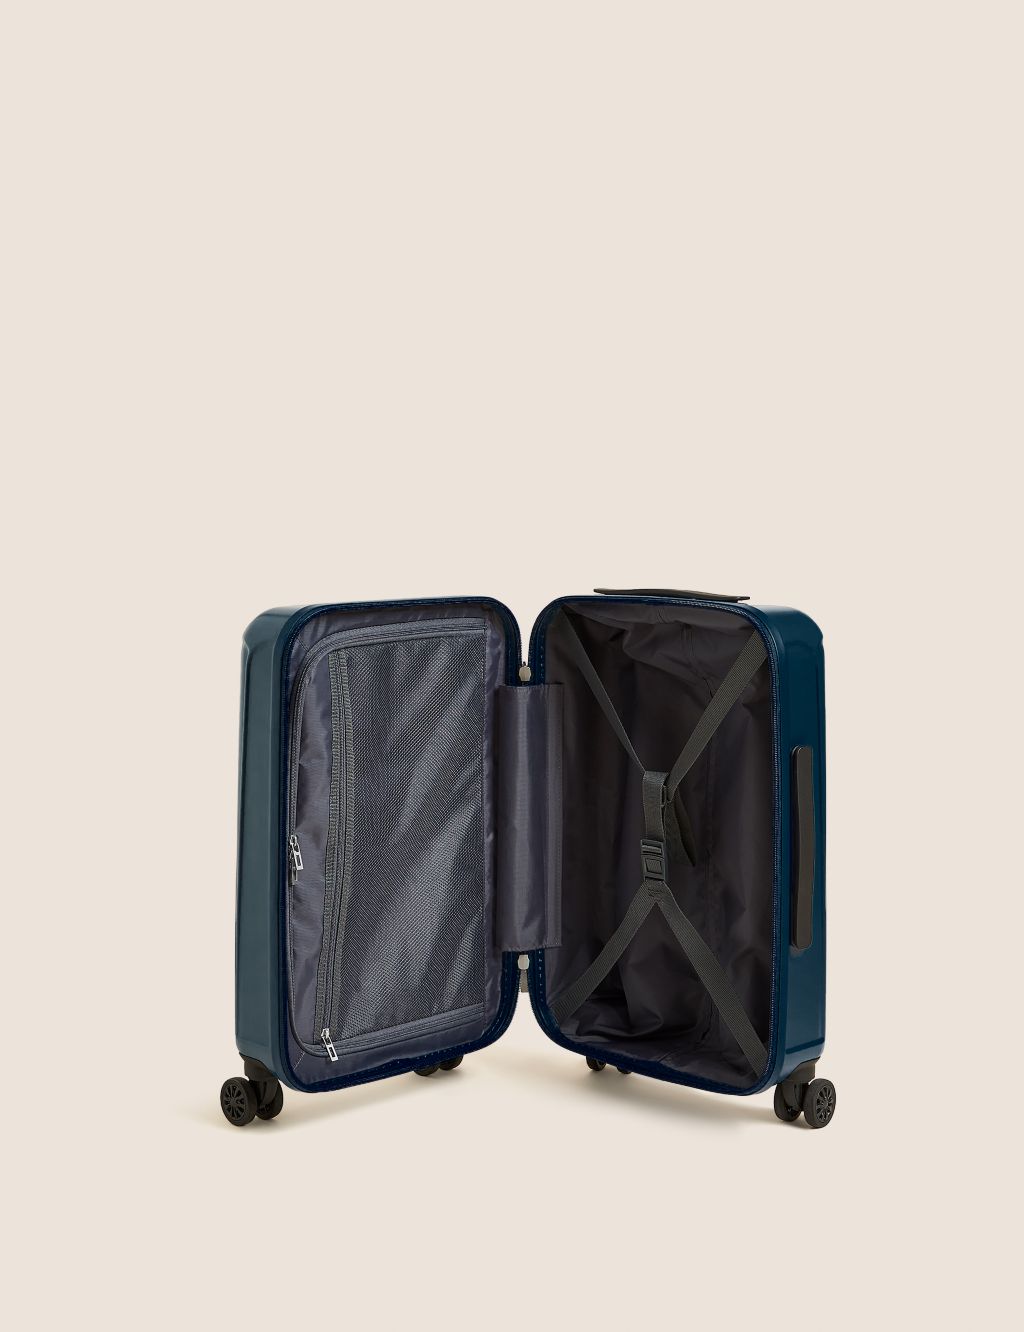 Amalfi 4 Wheel Hard Shell Cabin Suitcase image 6